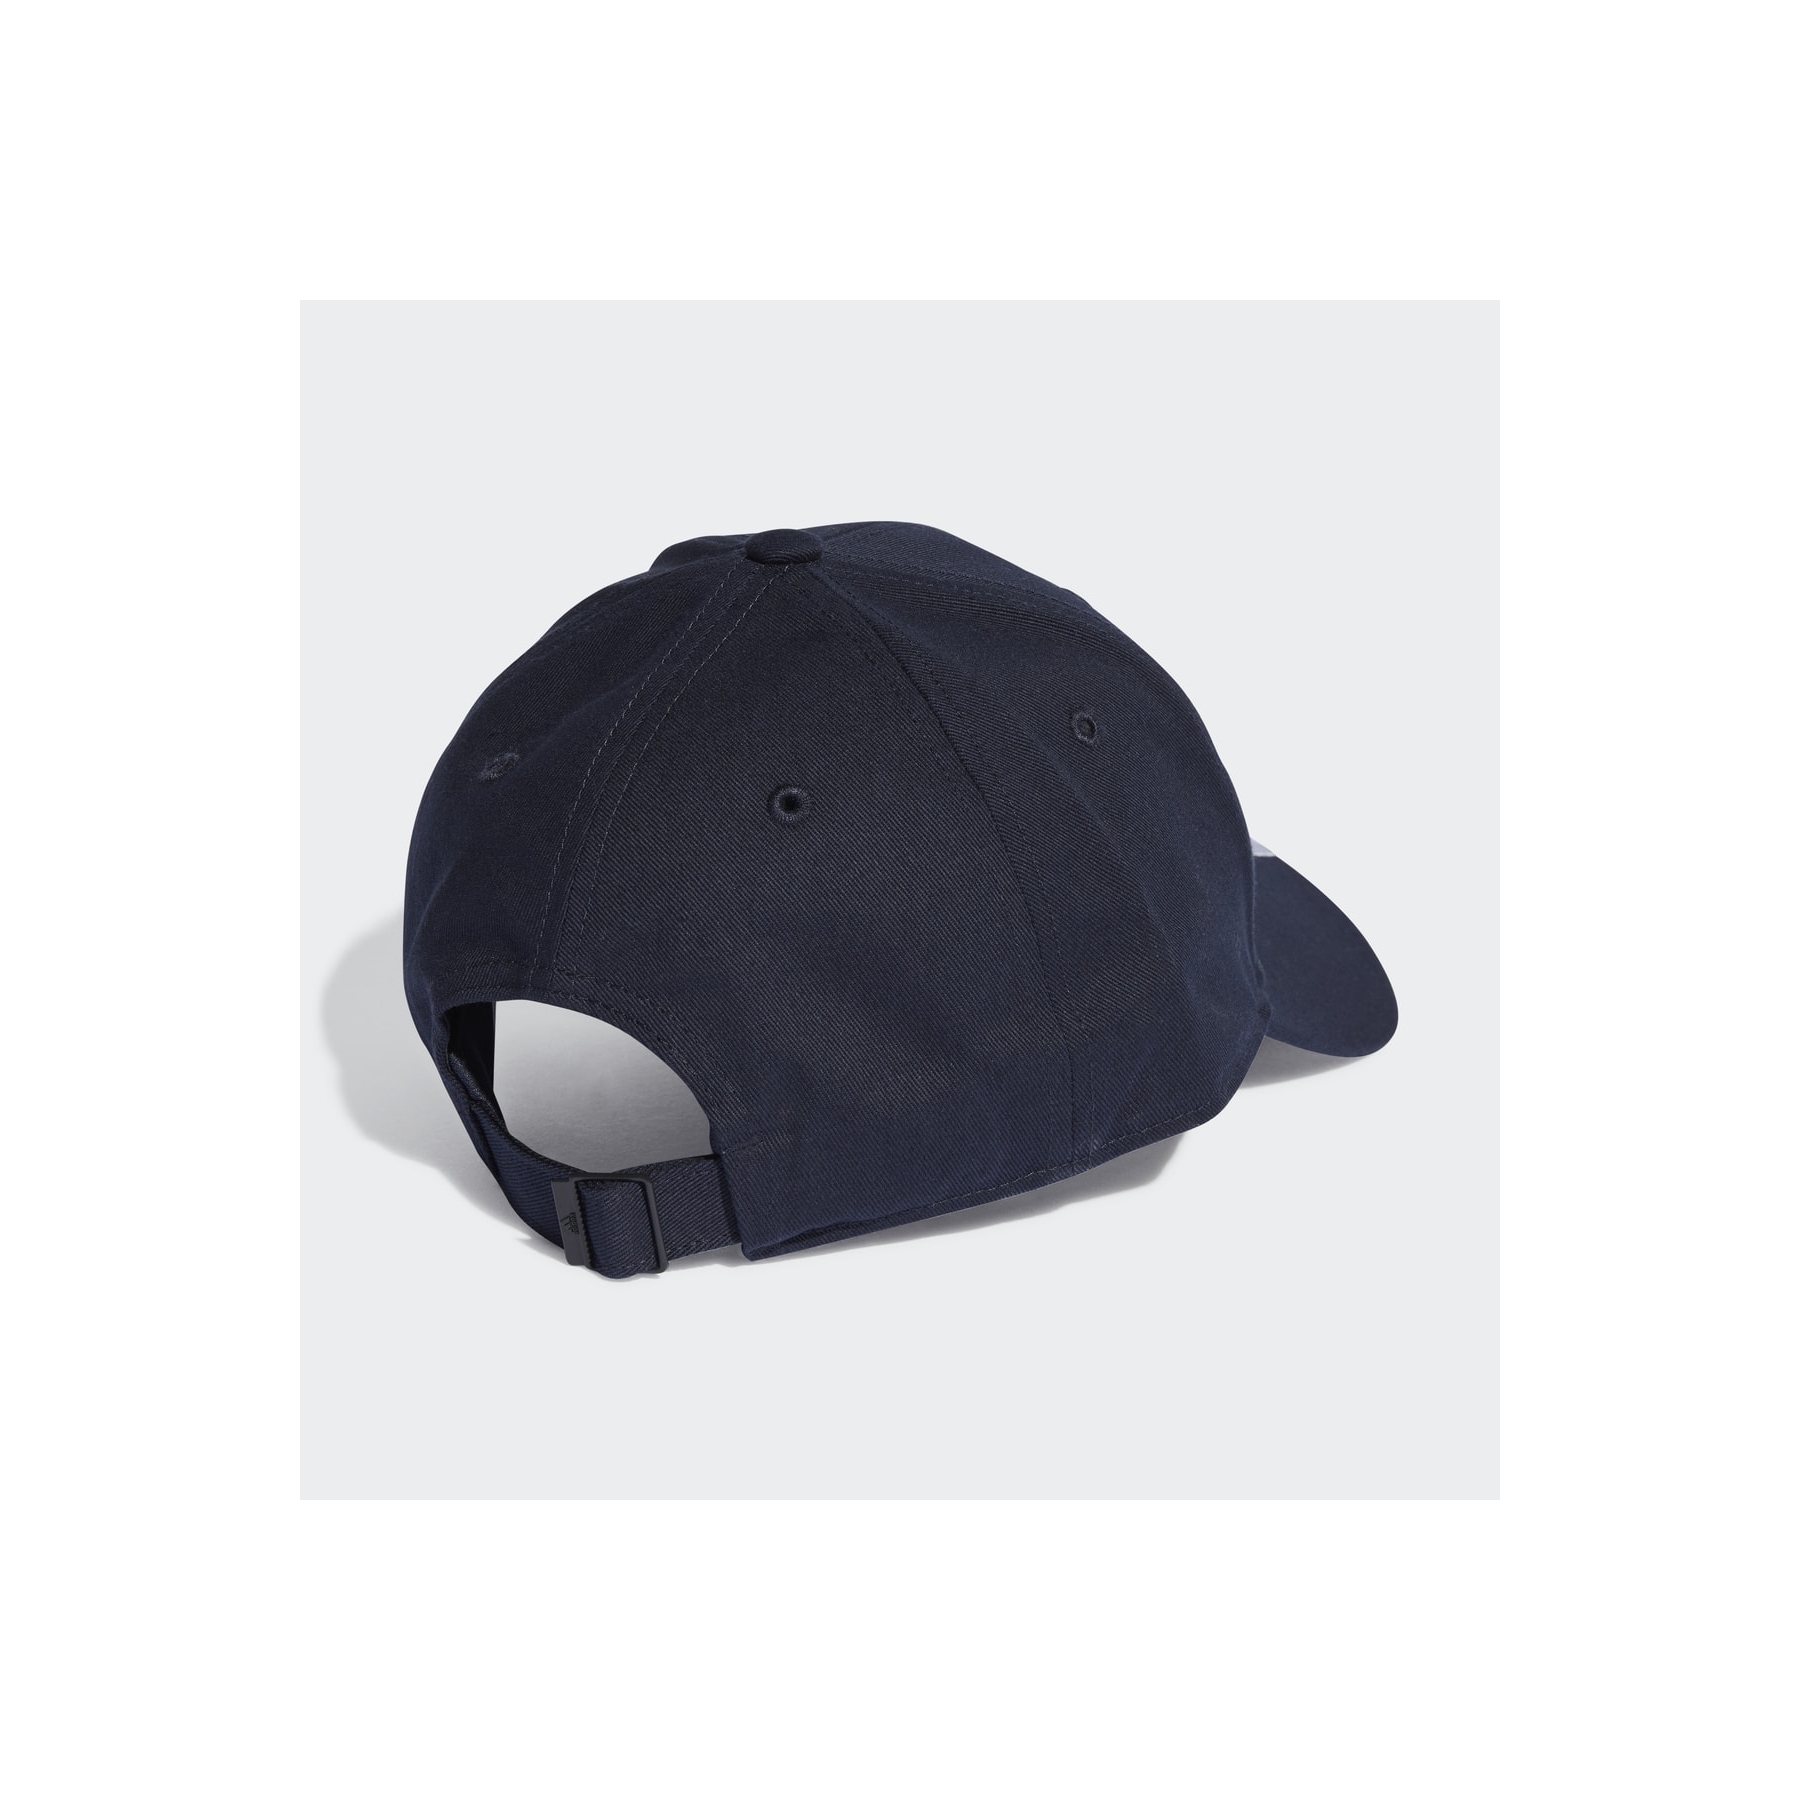 adidas Bball 3S Cap Unisex Siyah Şapka (II3510)